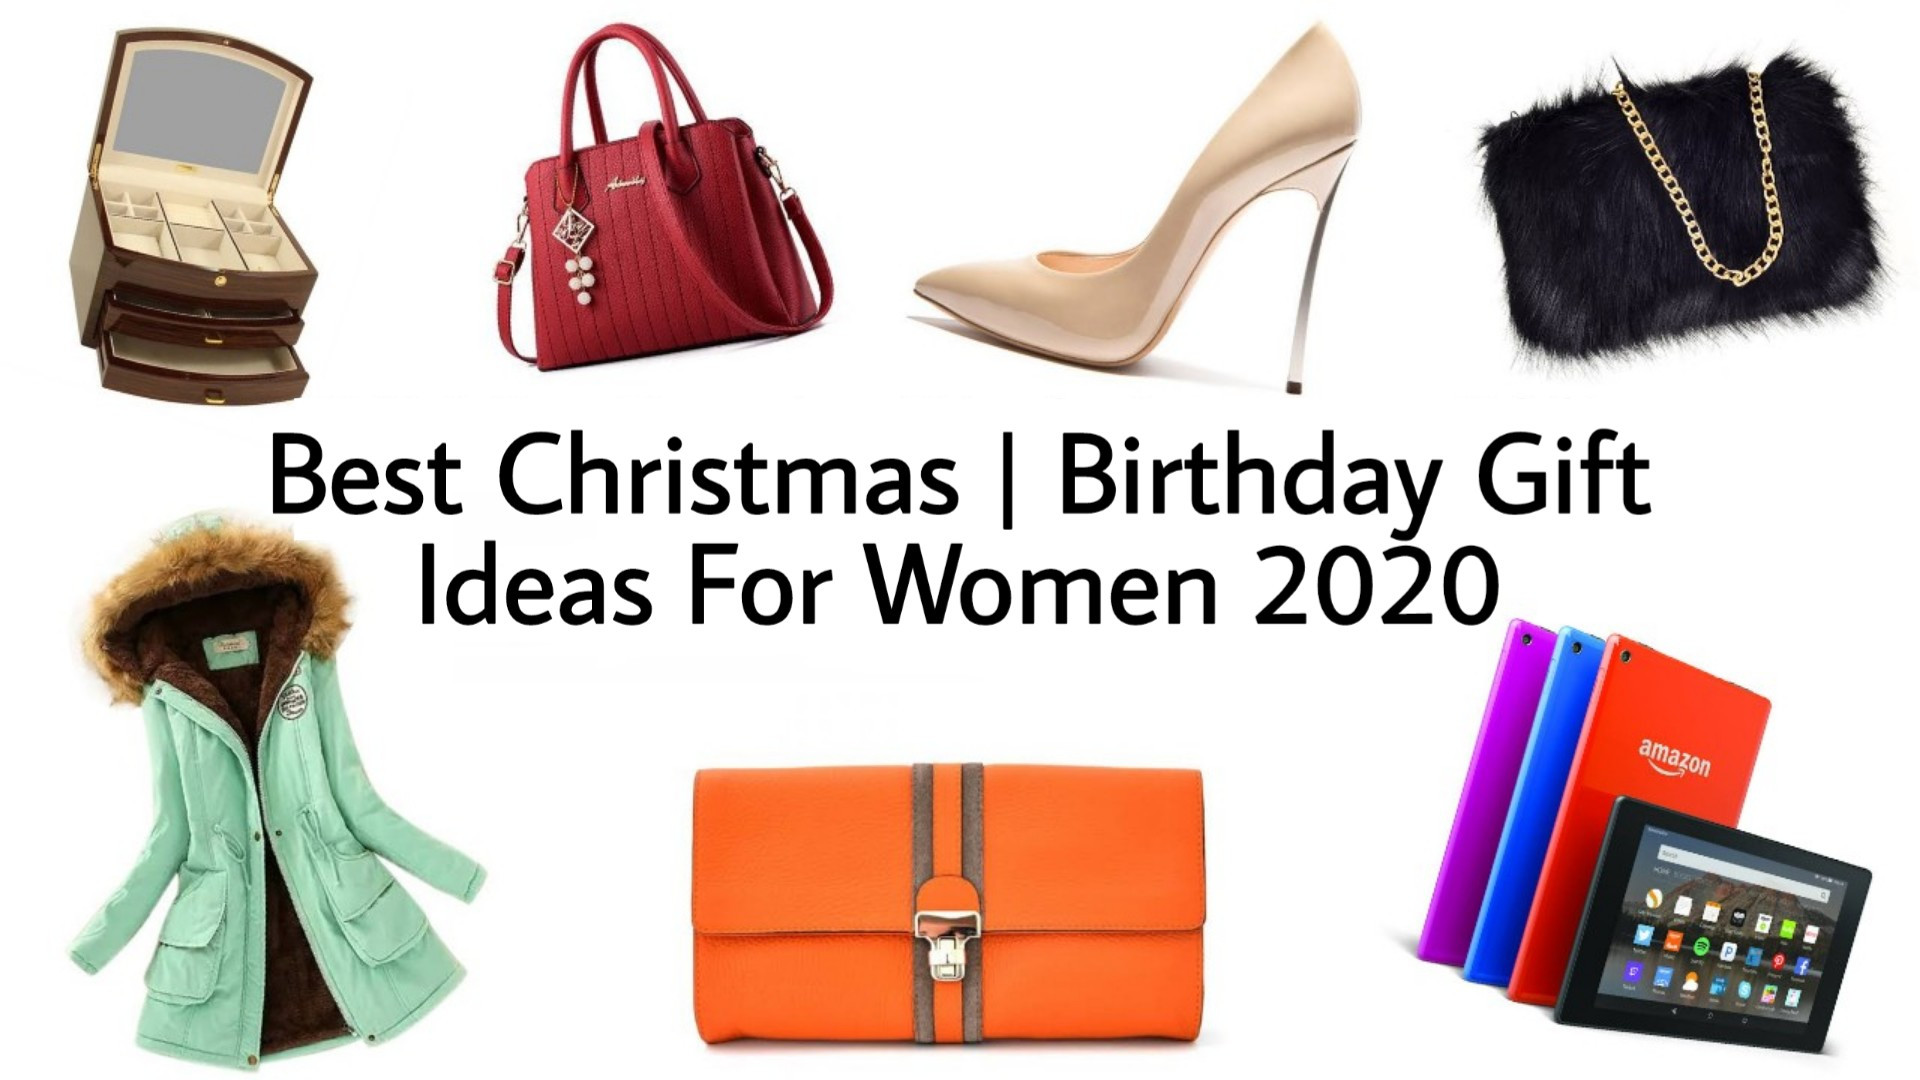 Women Christmas Gift Ideas 2020
 Best Christmas Gifts for Women 2020